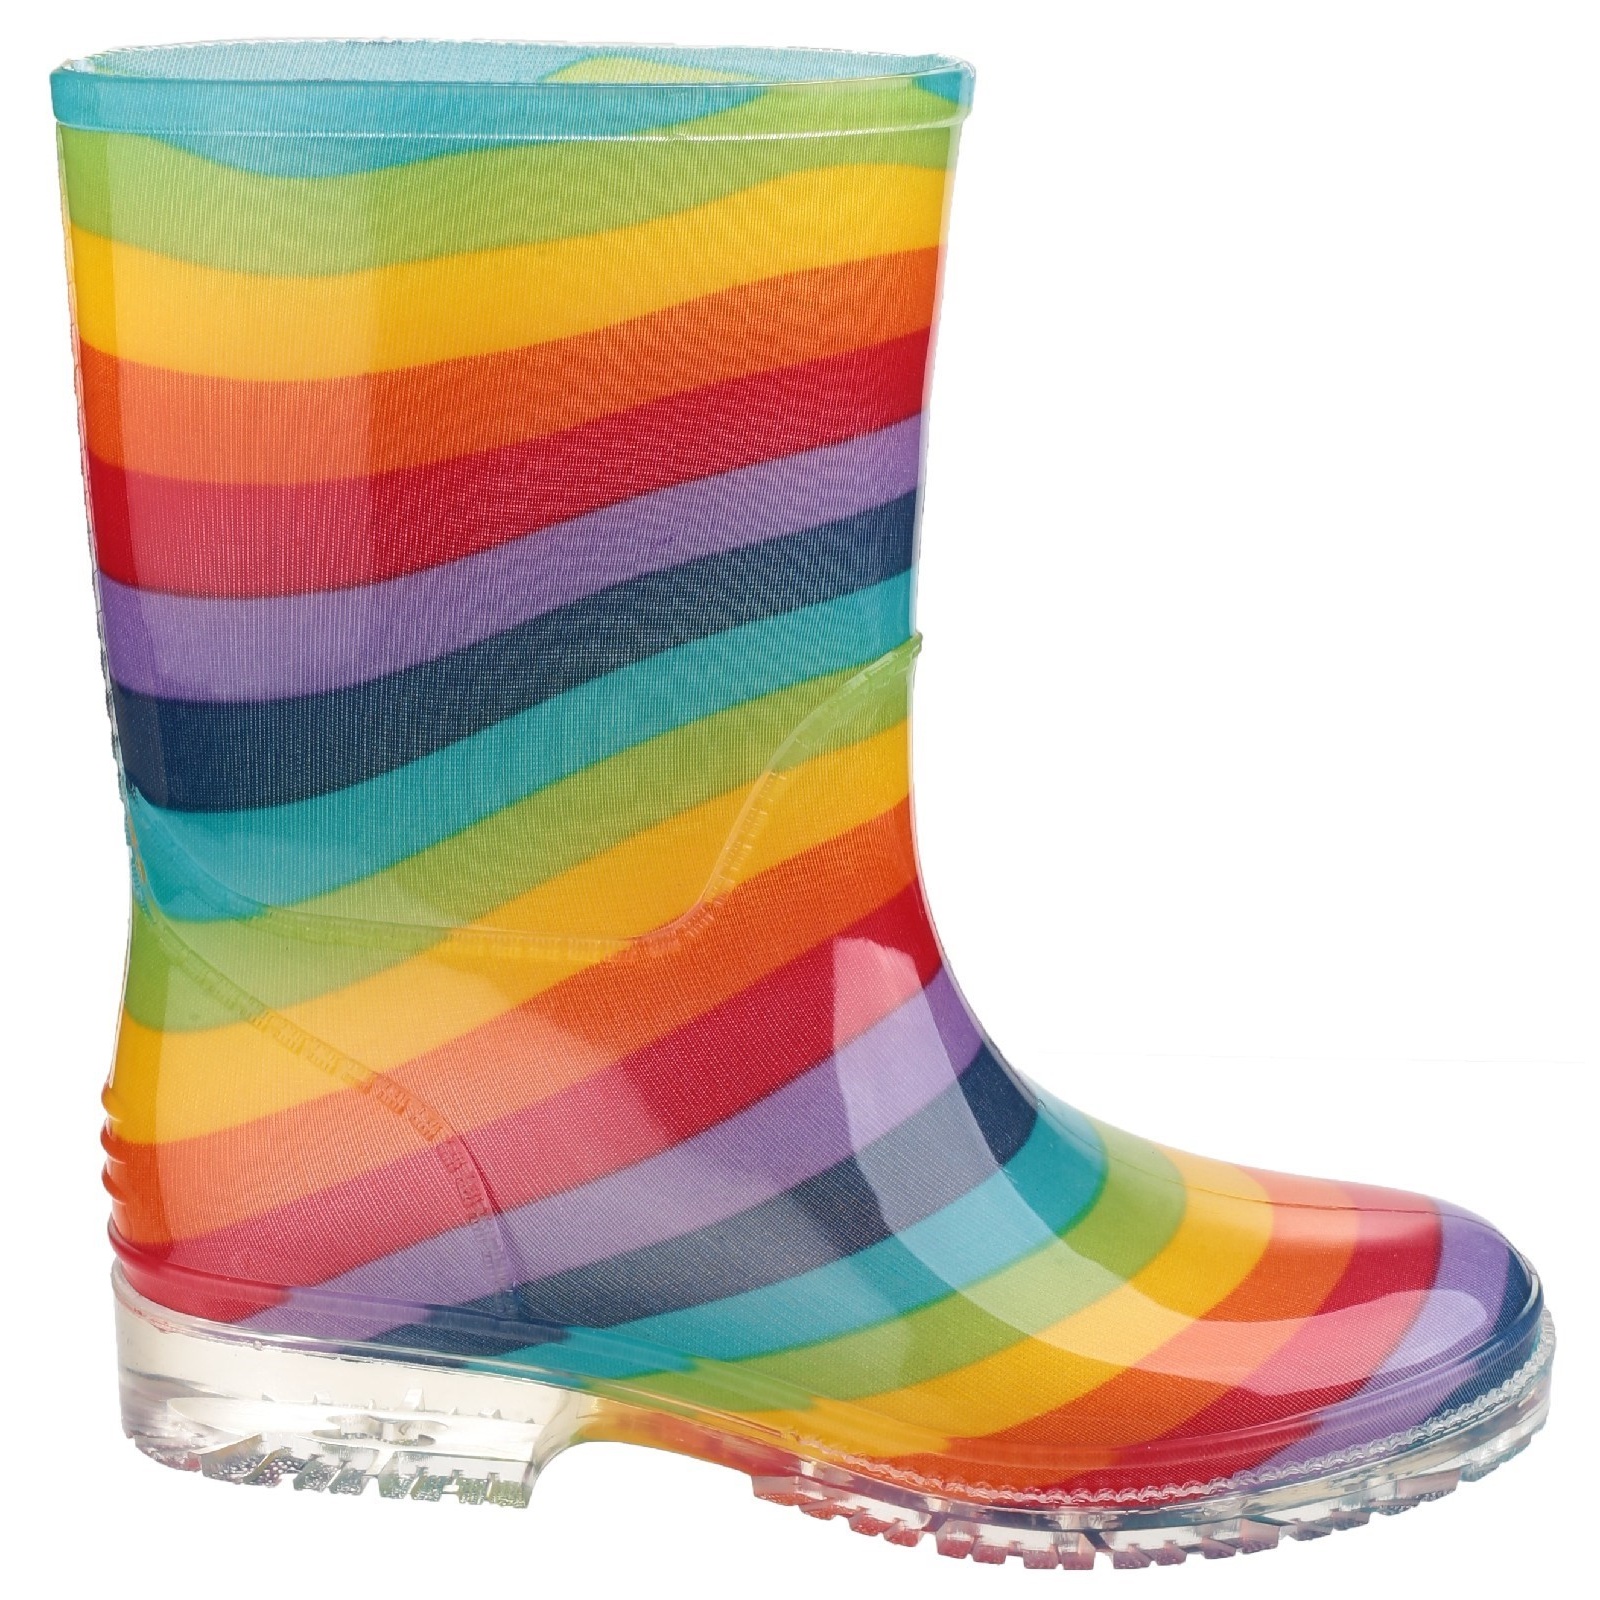 Botas De Agua De Pvc Modelo Rainbow Cotswold - multicolor - 